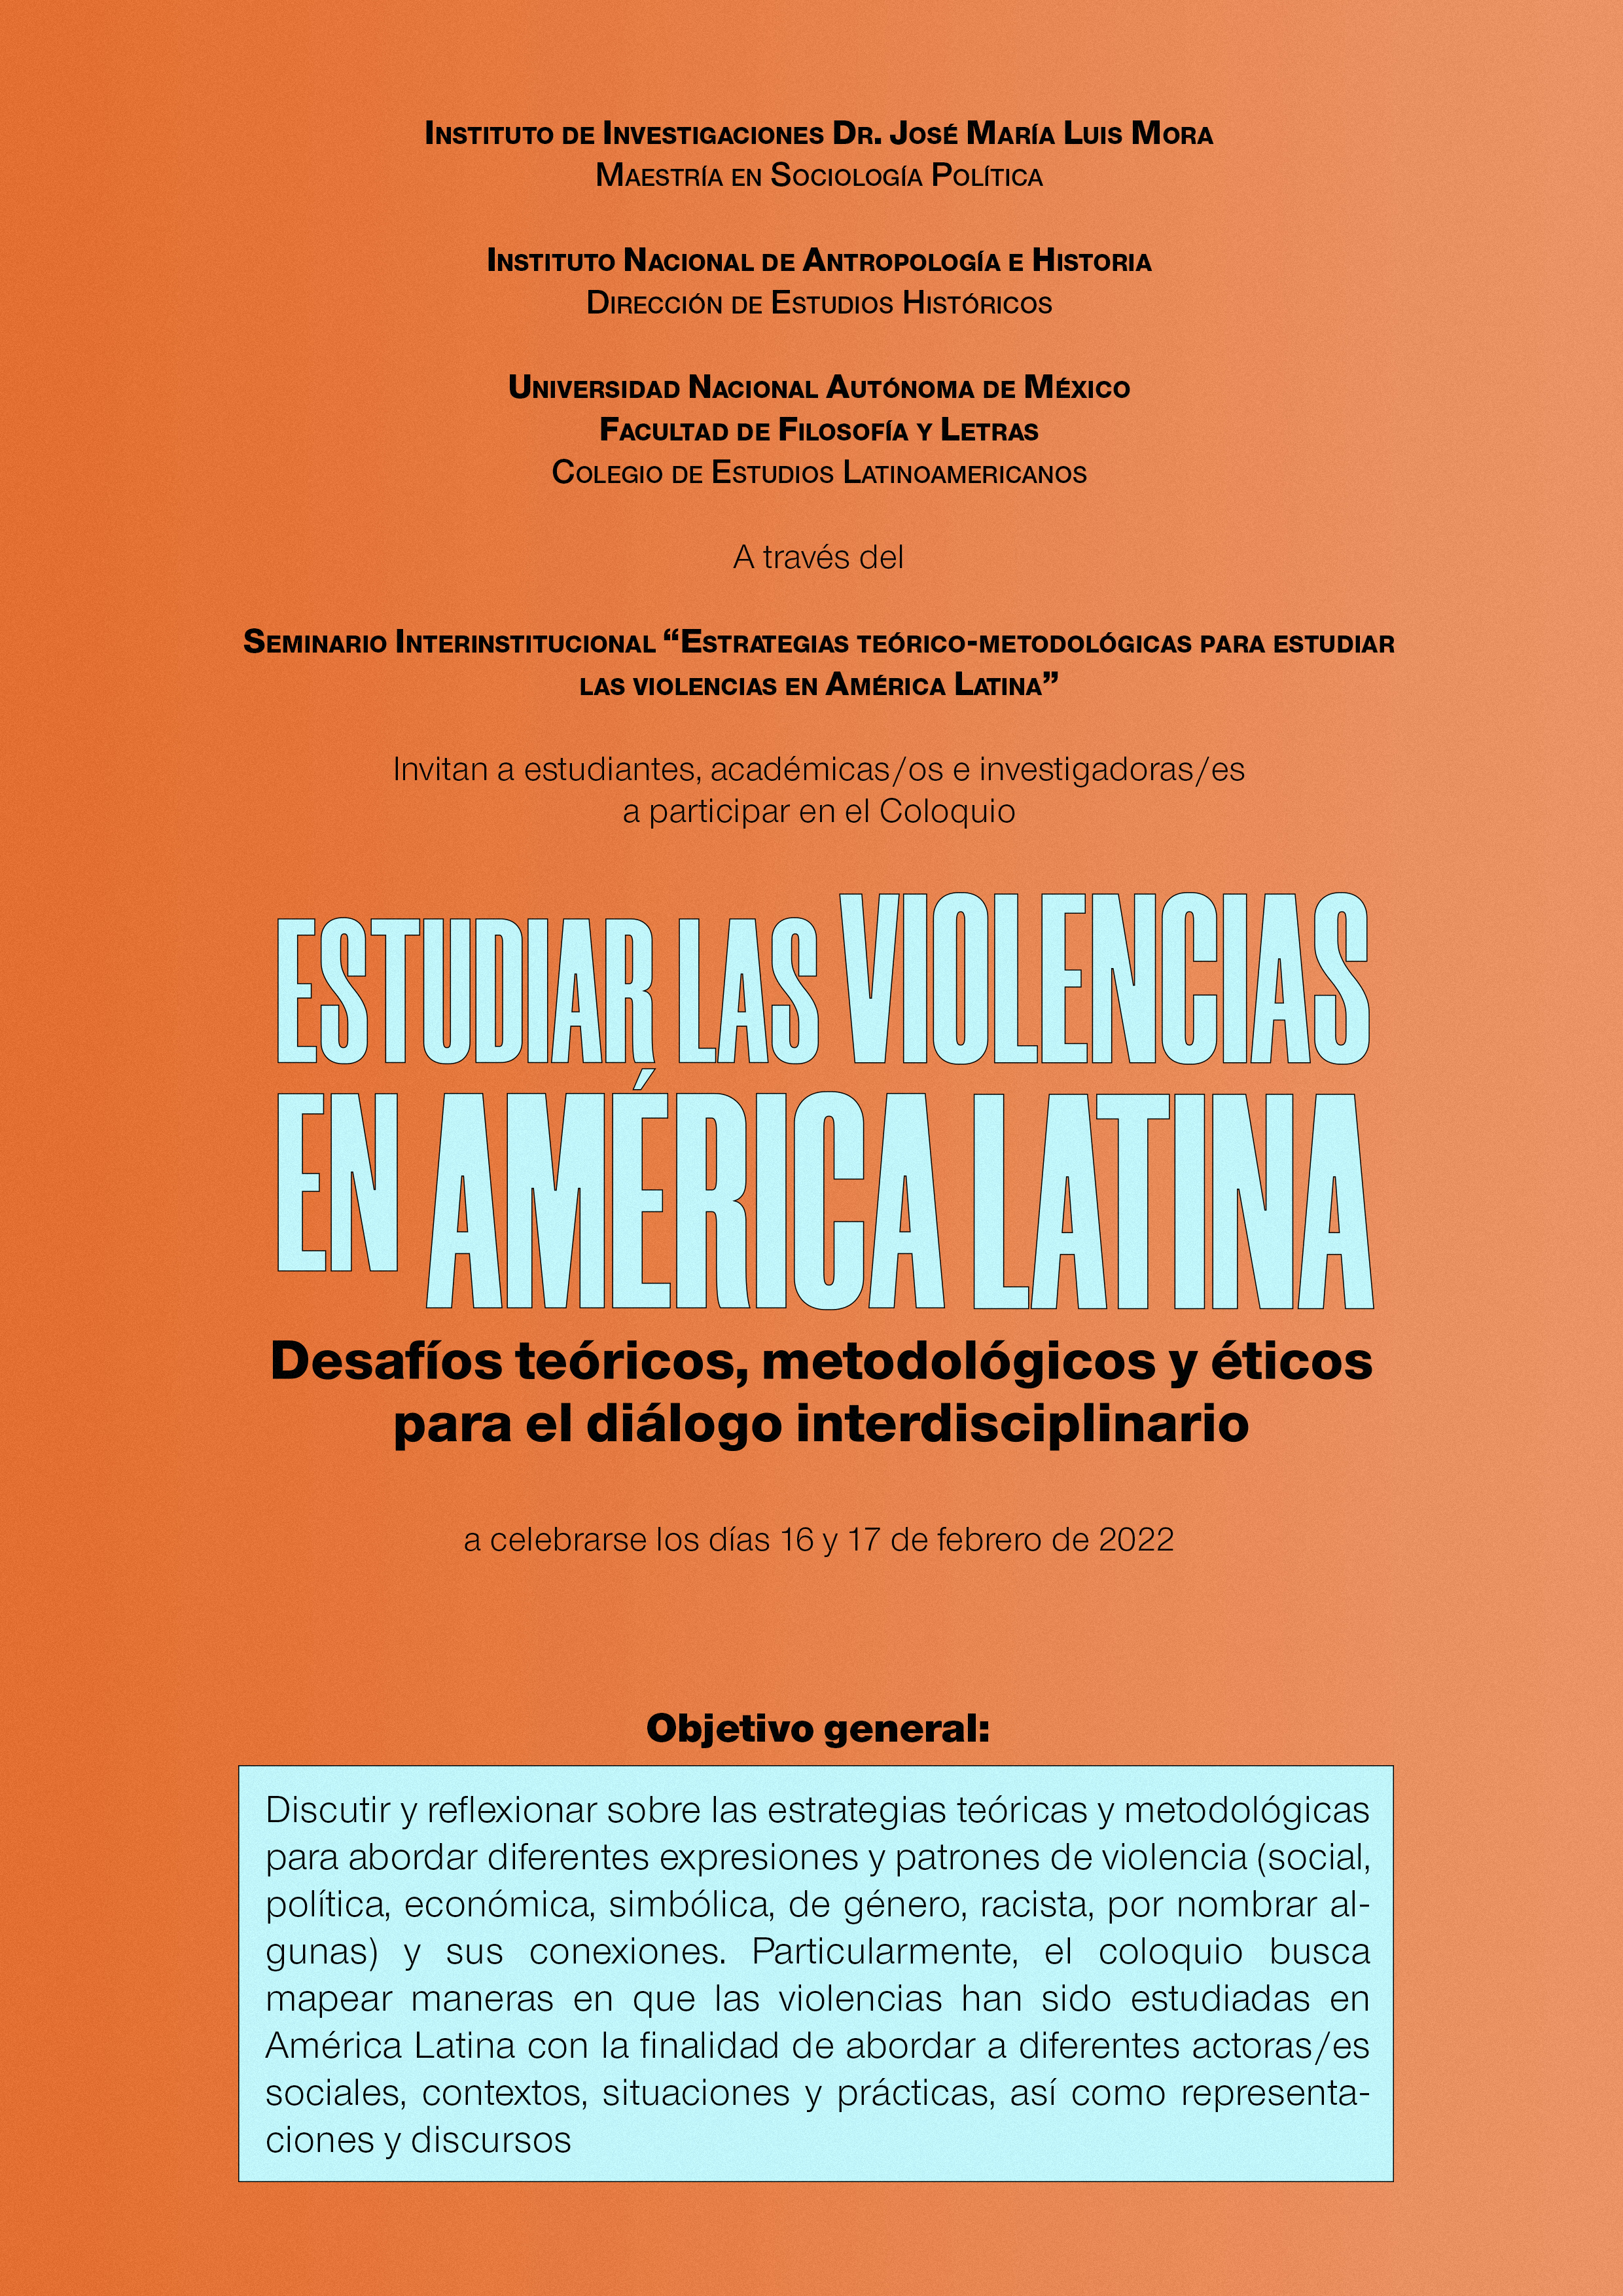 https://www.institutomora.edu.mx/Instituto/IE/1017_IECov02-0222.jpg